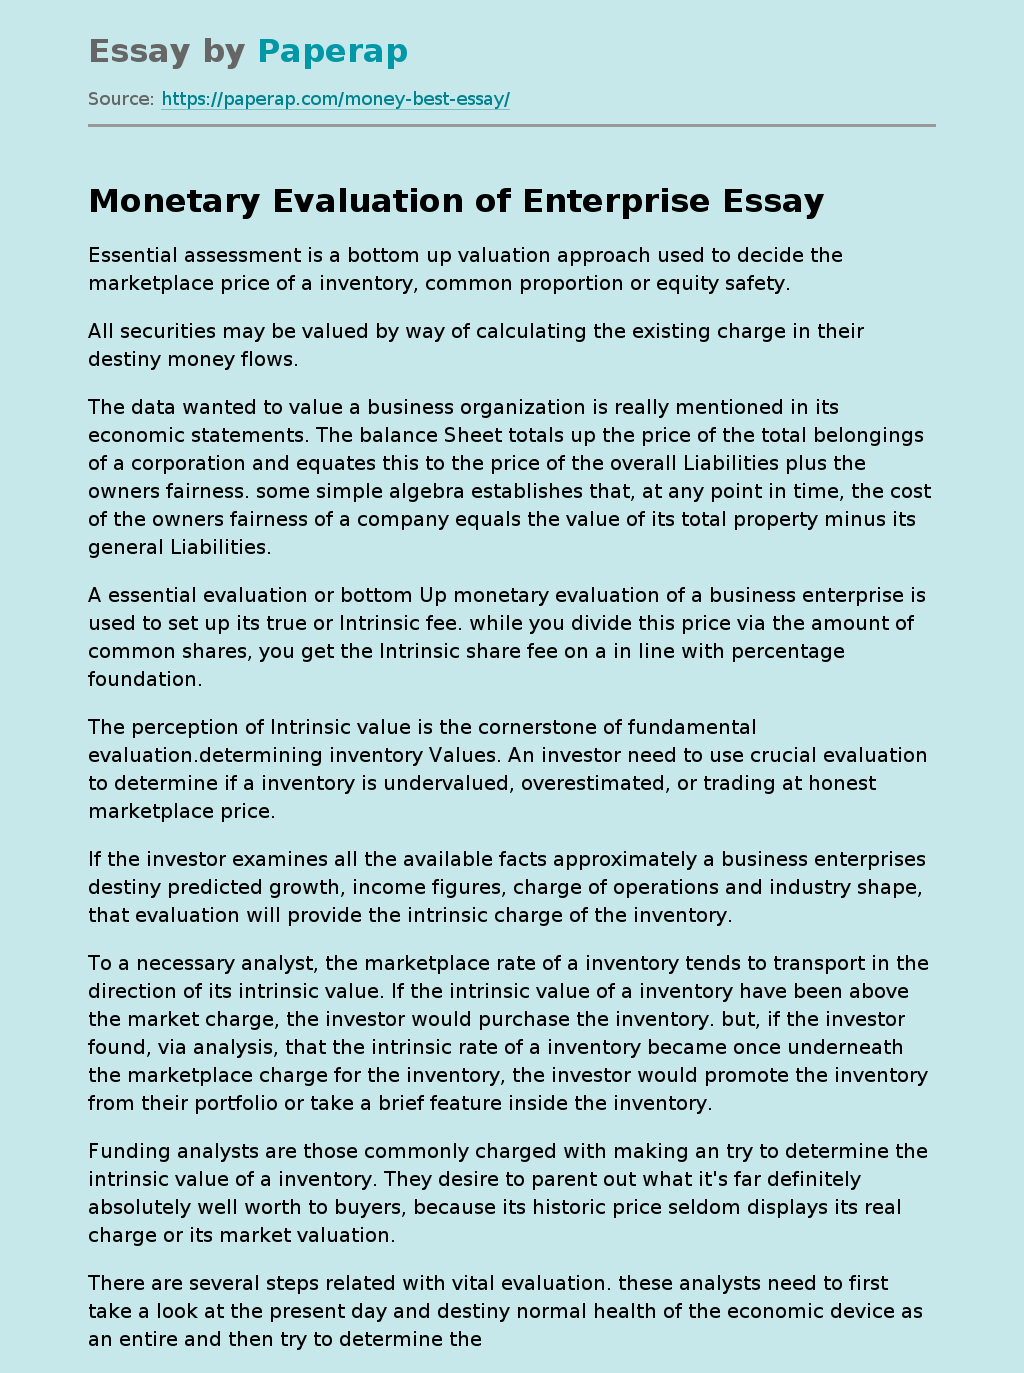 Monetary Evaluation of Enterprise